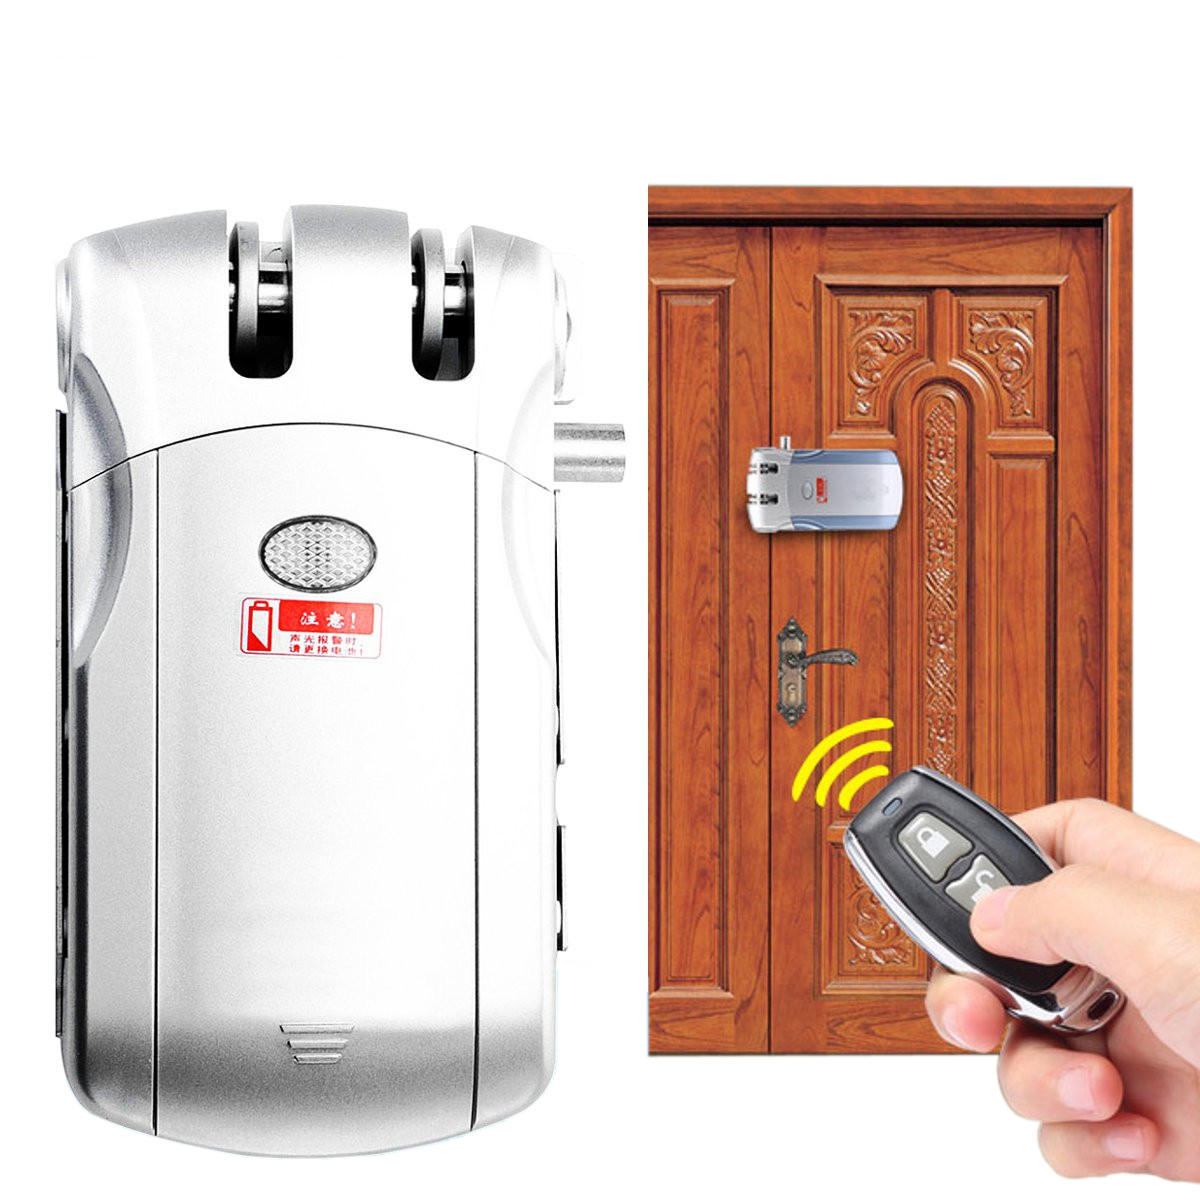 remote control antitheft door lock home wireless security access system set Sale